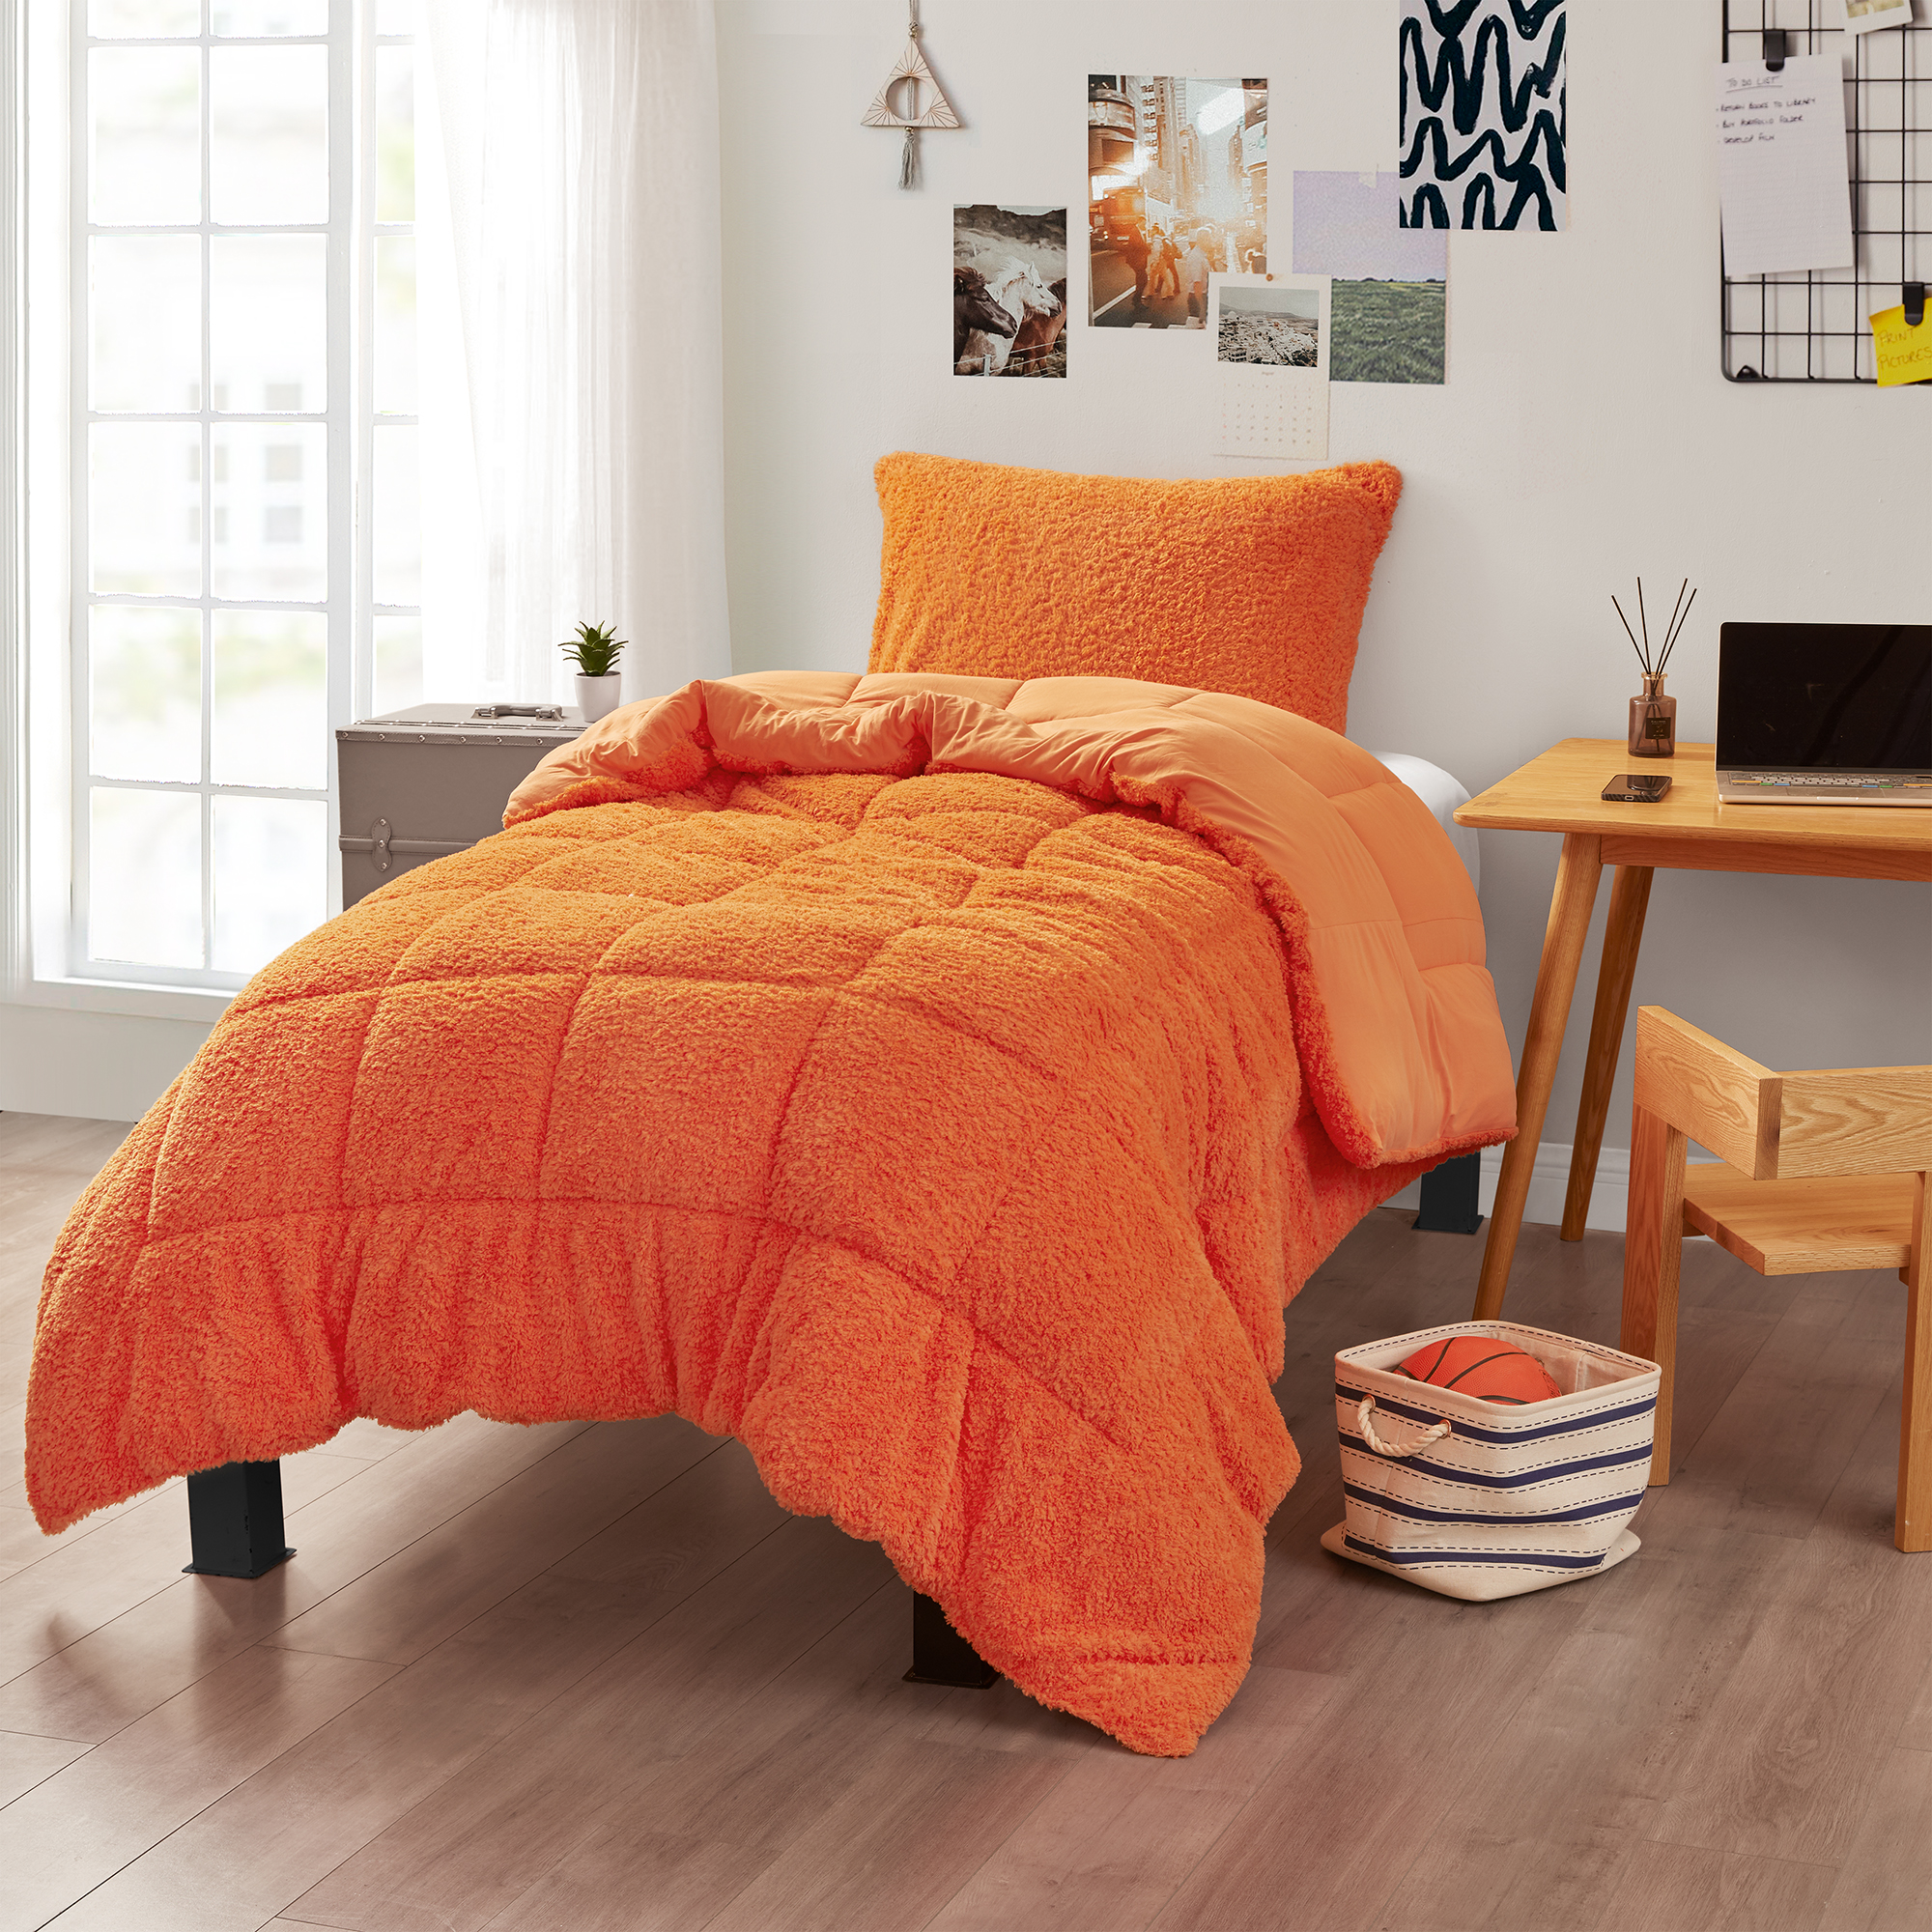 Dreamsicle Creamsicle - Coma Inducer® Twin XL Comforter - Orange Peel